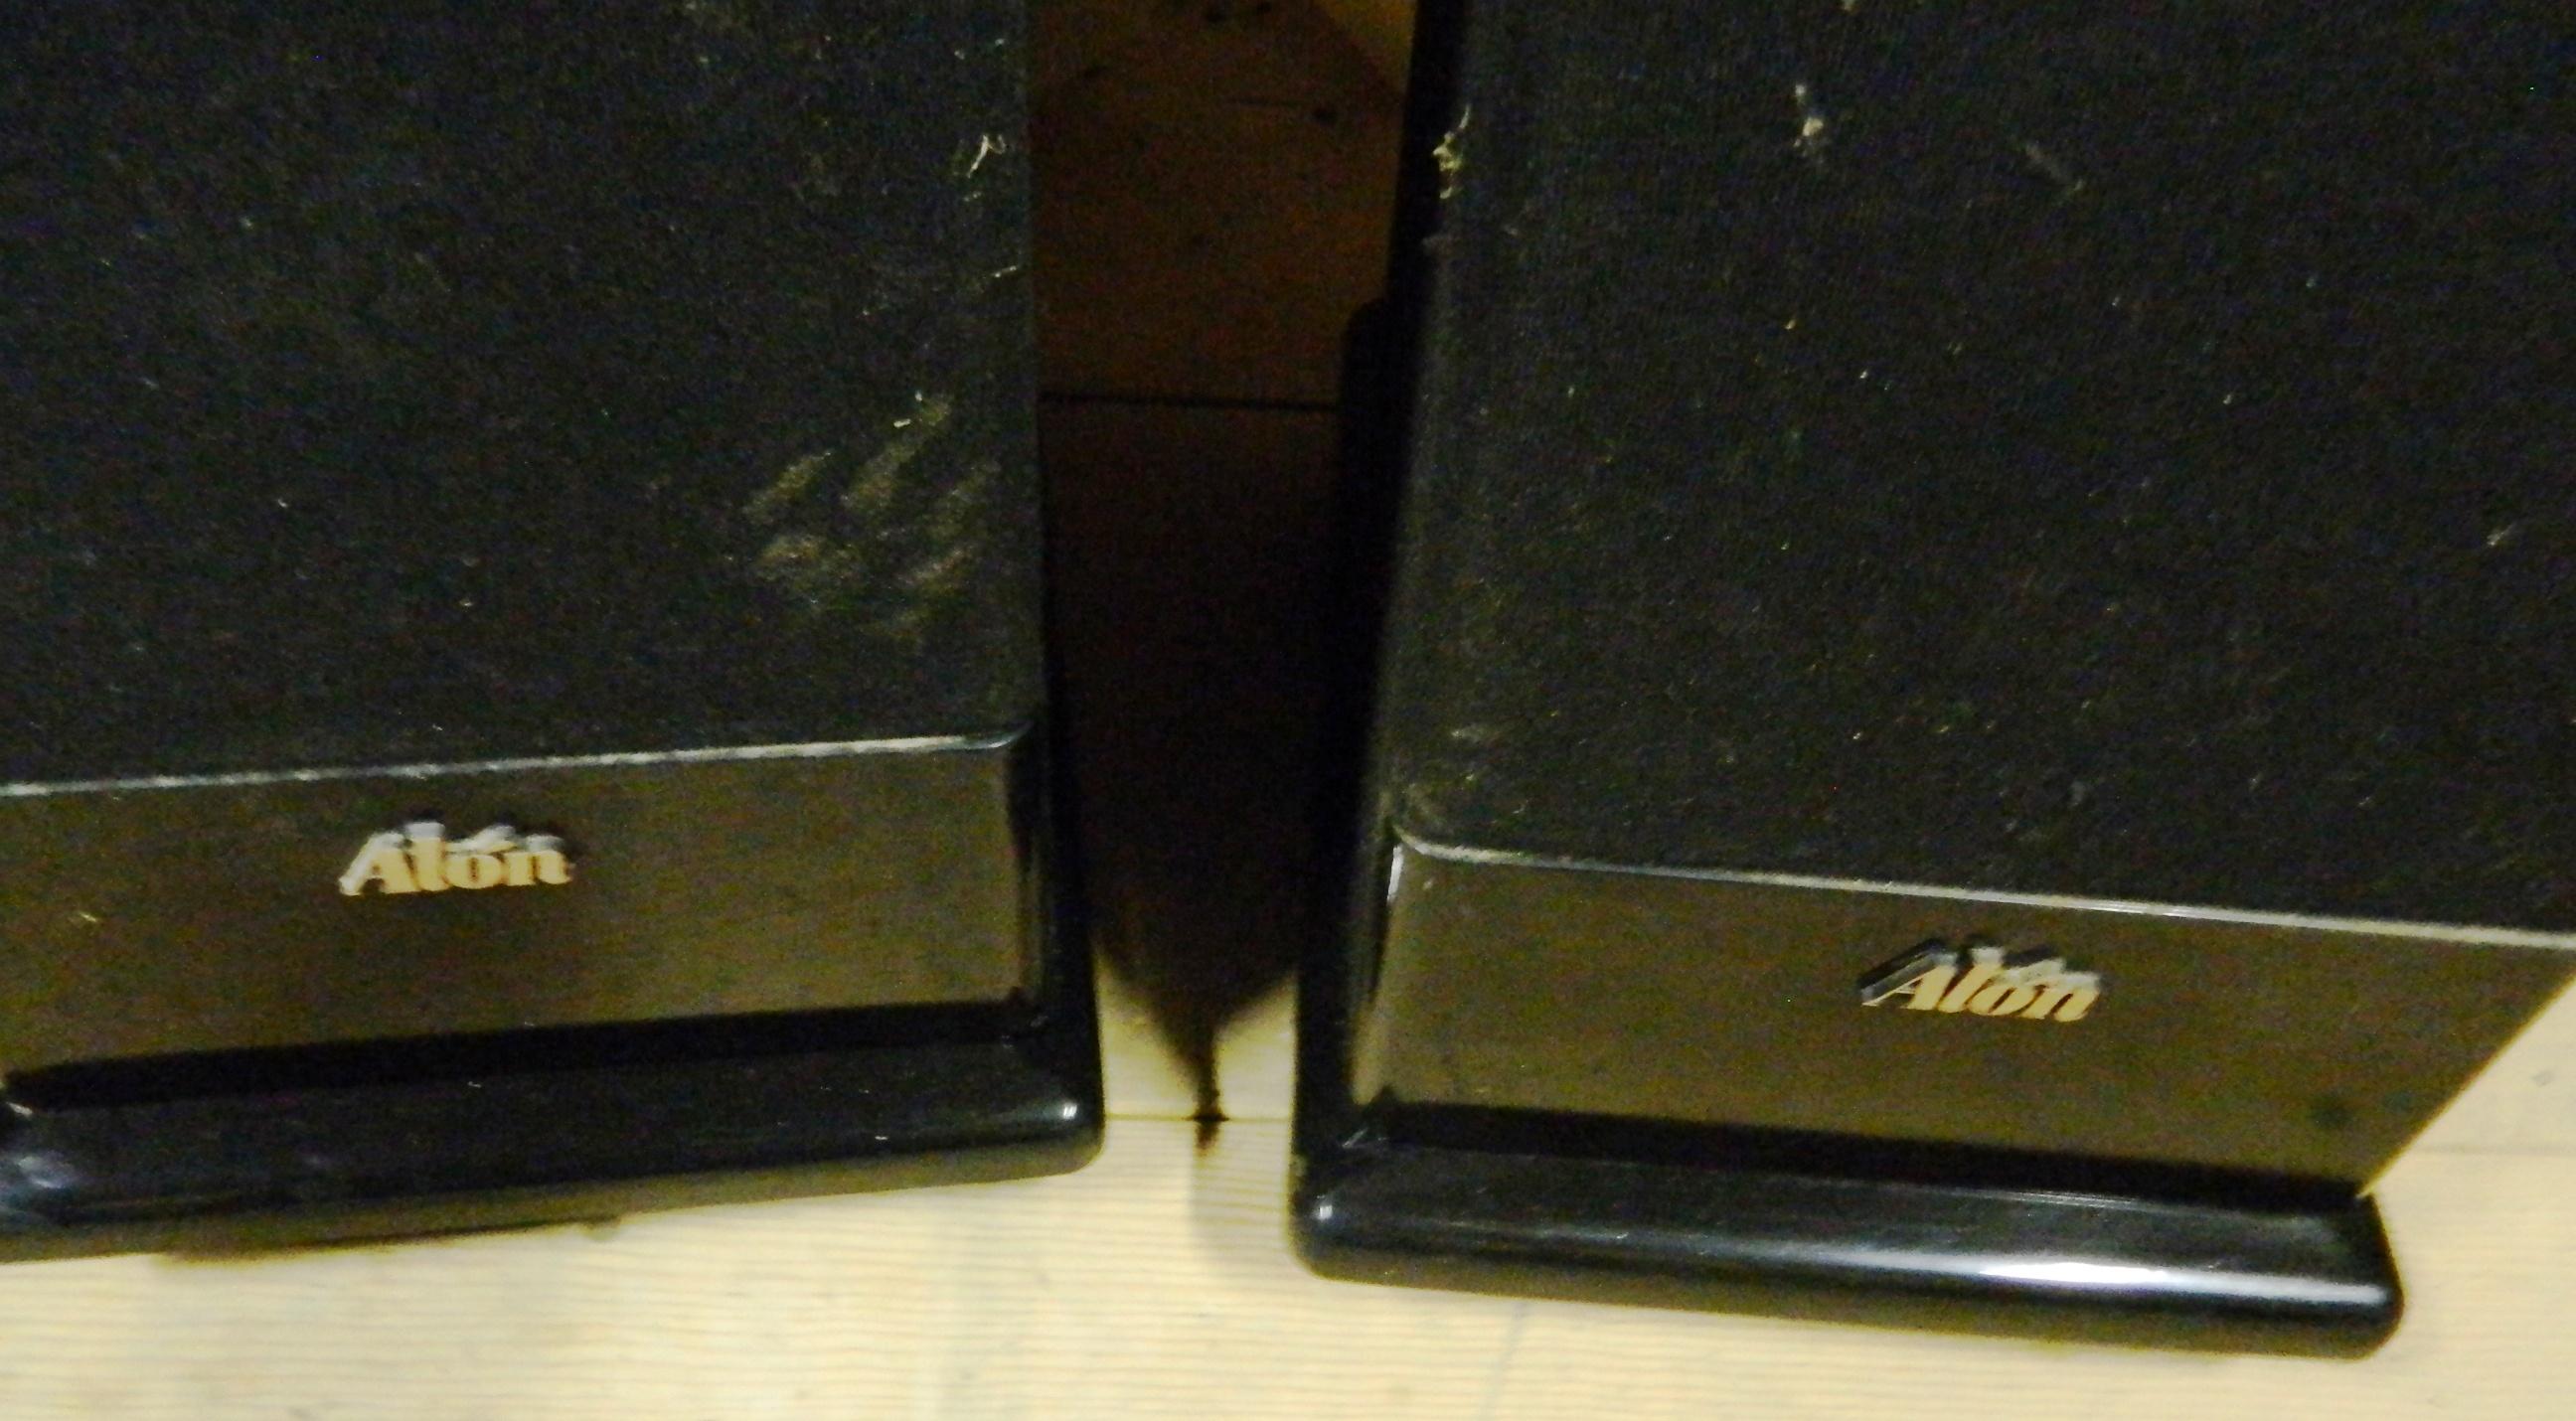 Pair Alon Lotus SE speakers